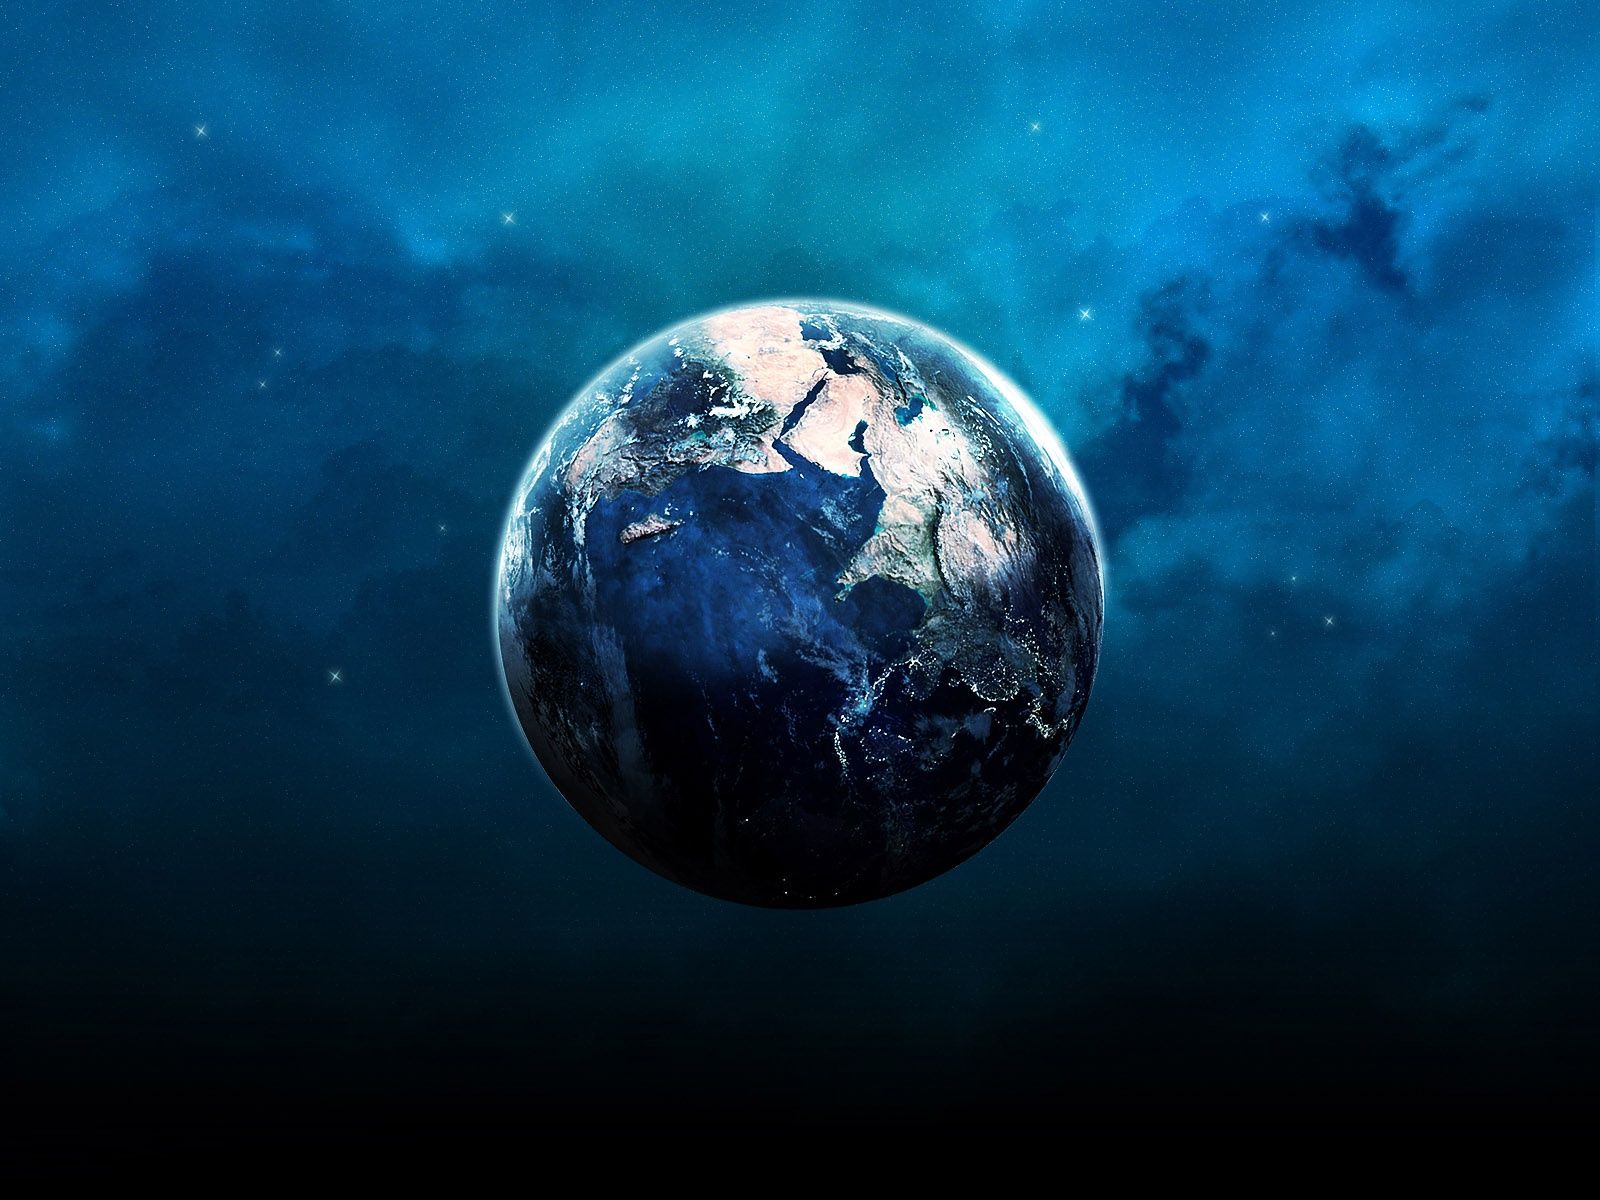 Planet Desktop Wallpaper FREE on Latoro.com